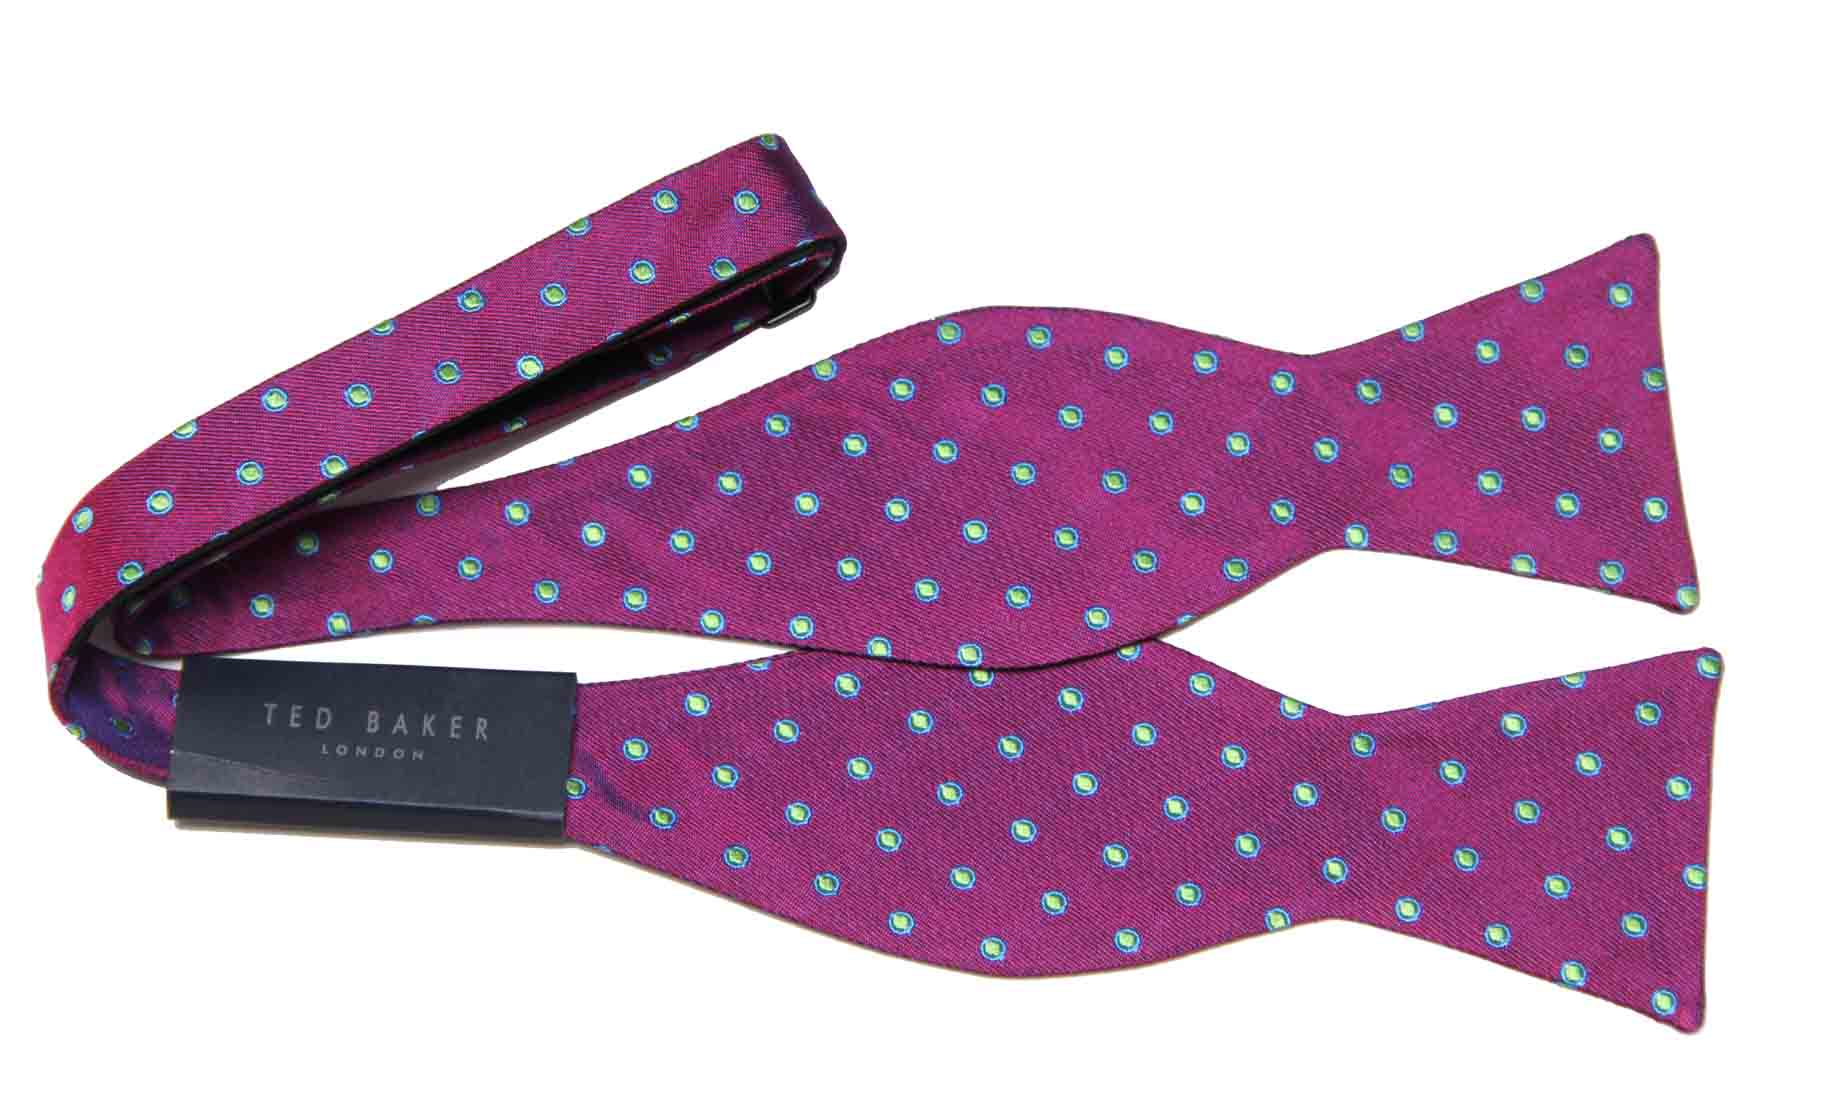 Ted Baker London Bow Tie Silk Purple Blue Yellow Polka Dot Men's OS